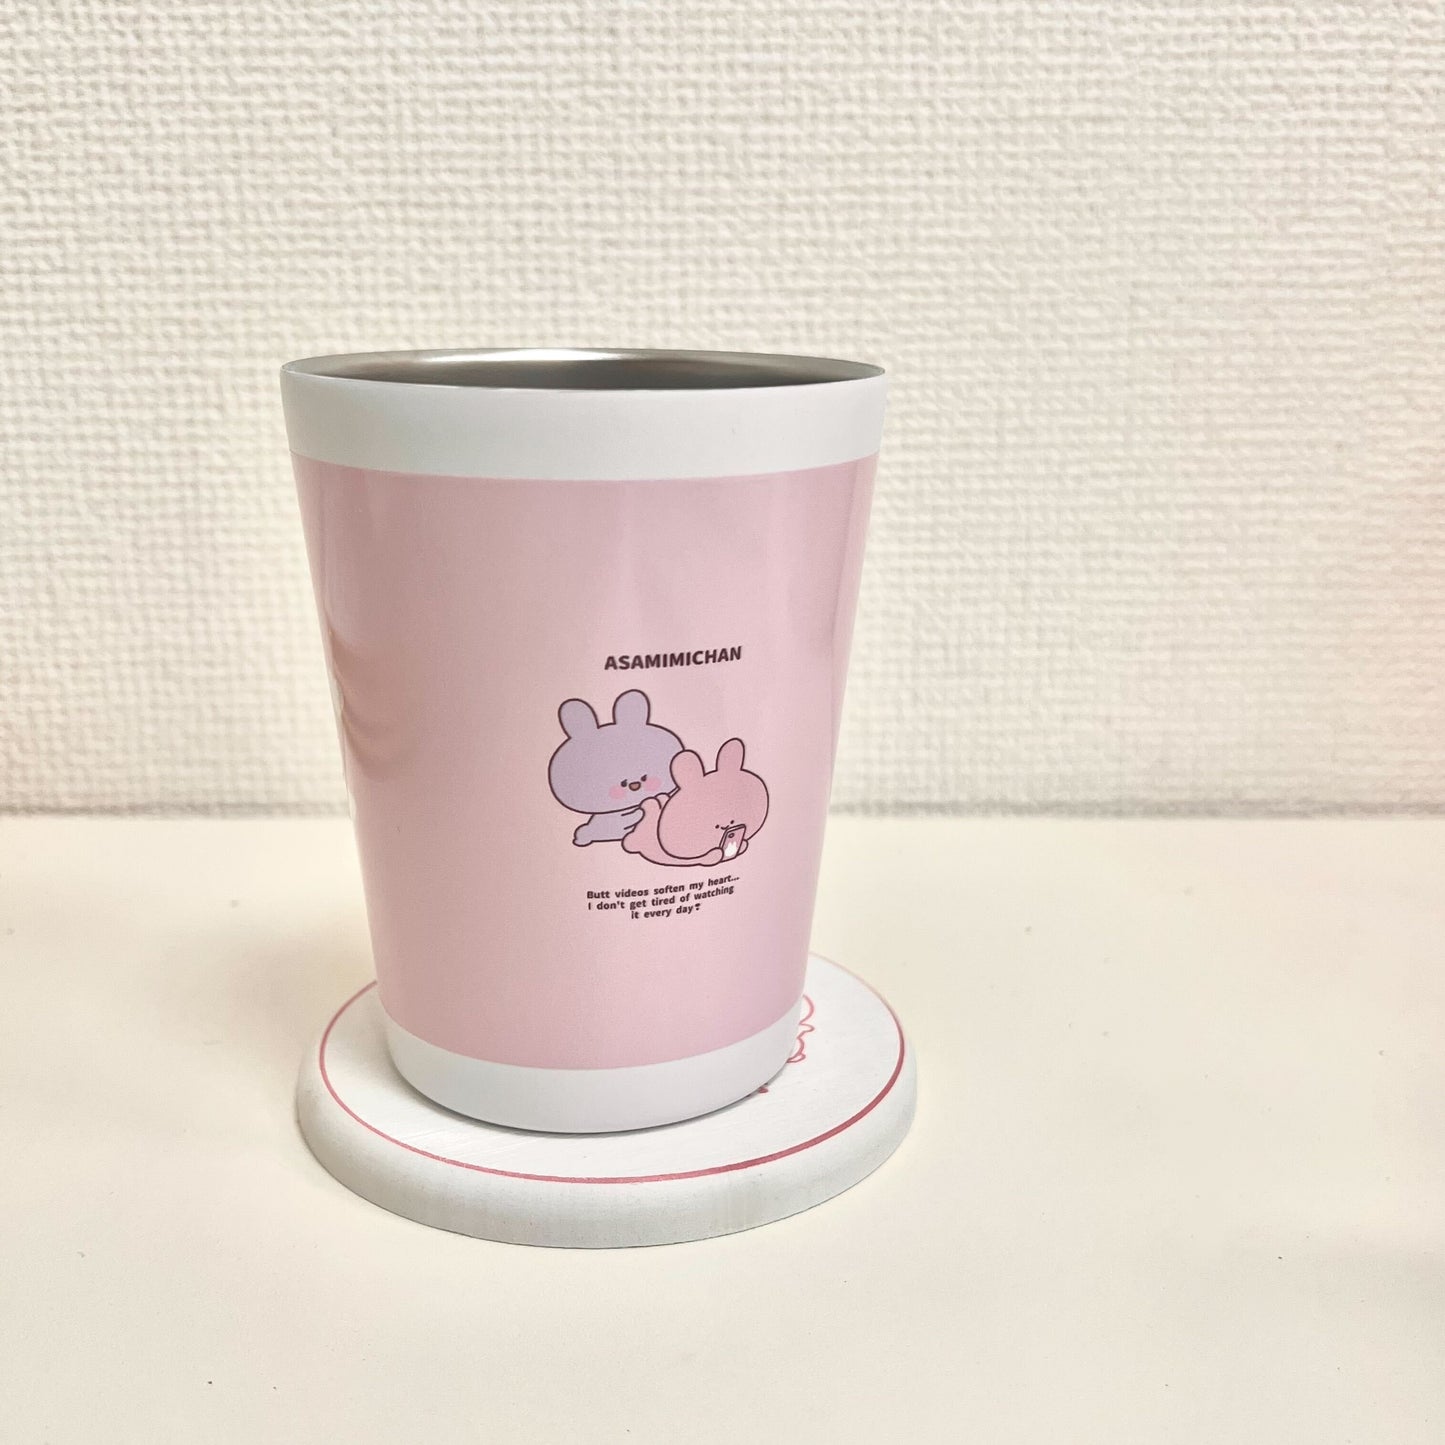 [Asamimi-chan] Diatomaceous earth coaster (Asamimi-chan popular scene Yoseatsume series) [Shipped in mid-February]